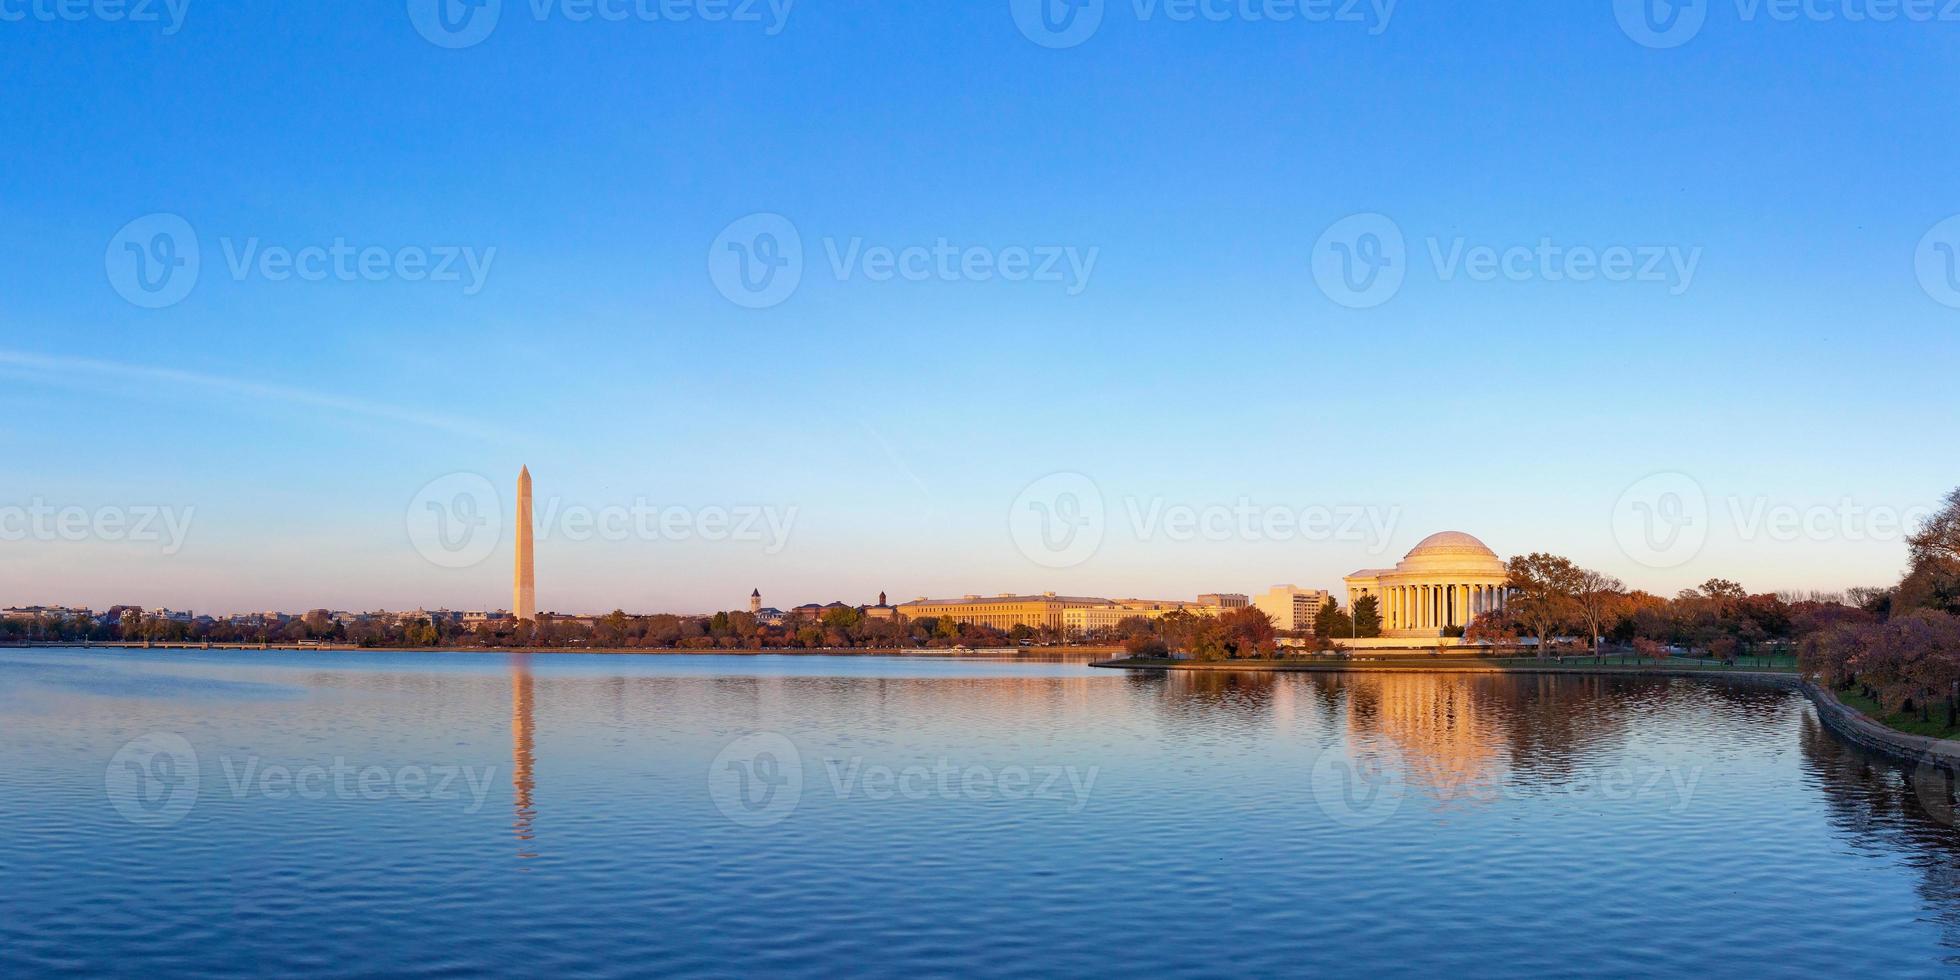 Jefferson Memorial e Washington Monument, Washington DC, Stati Uniti d'America foto